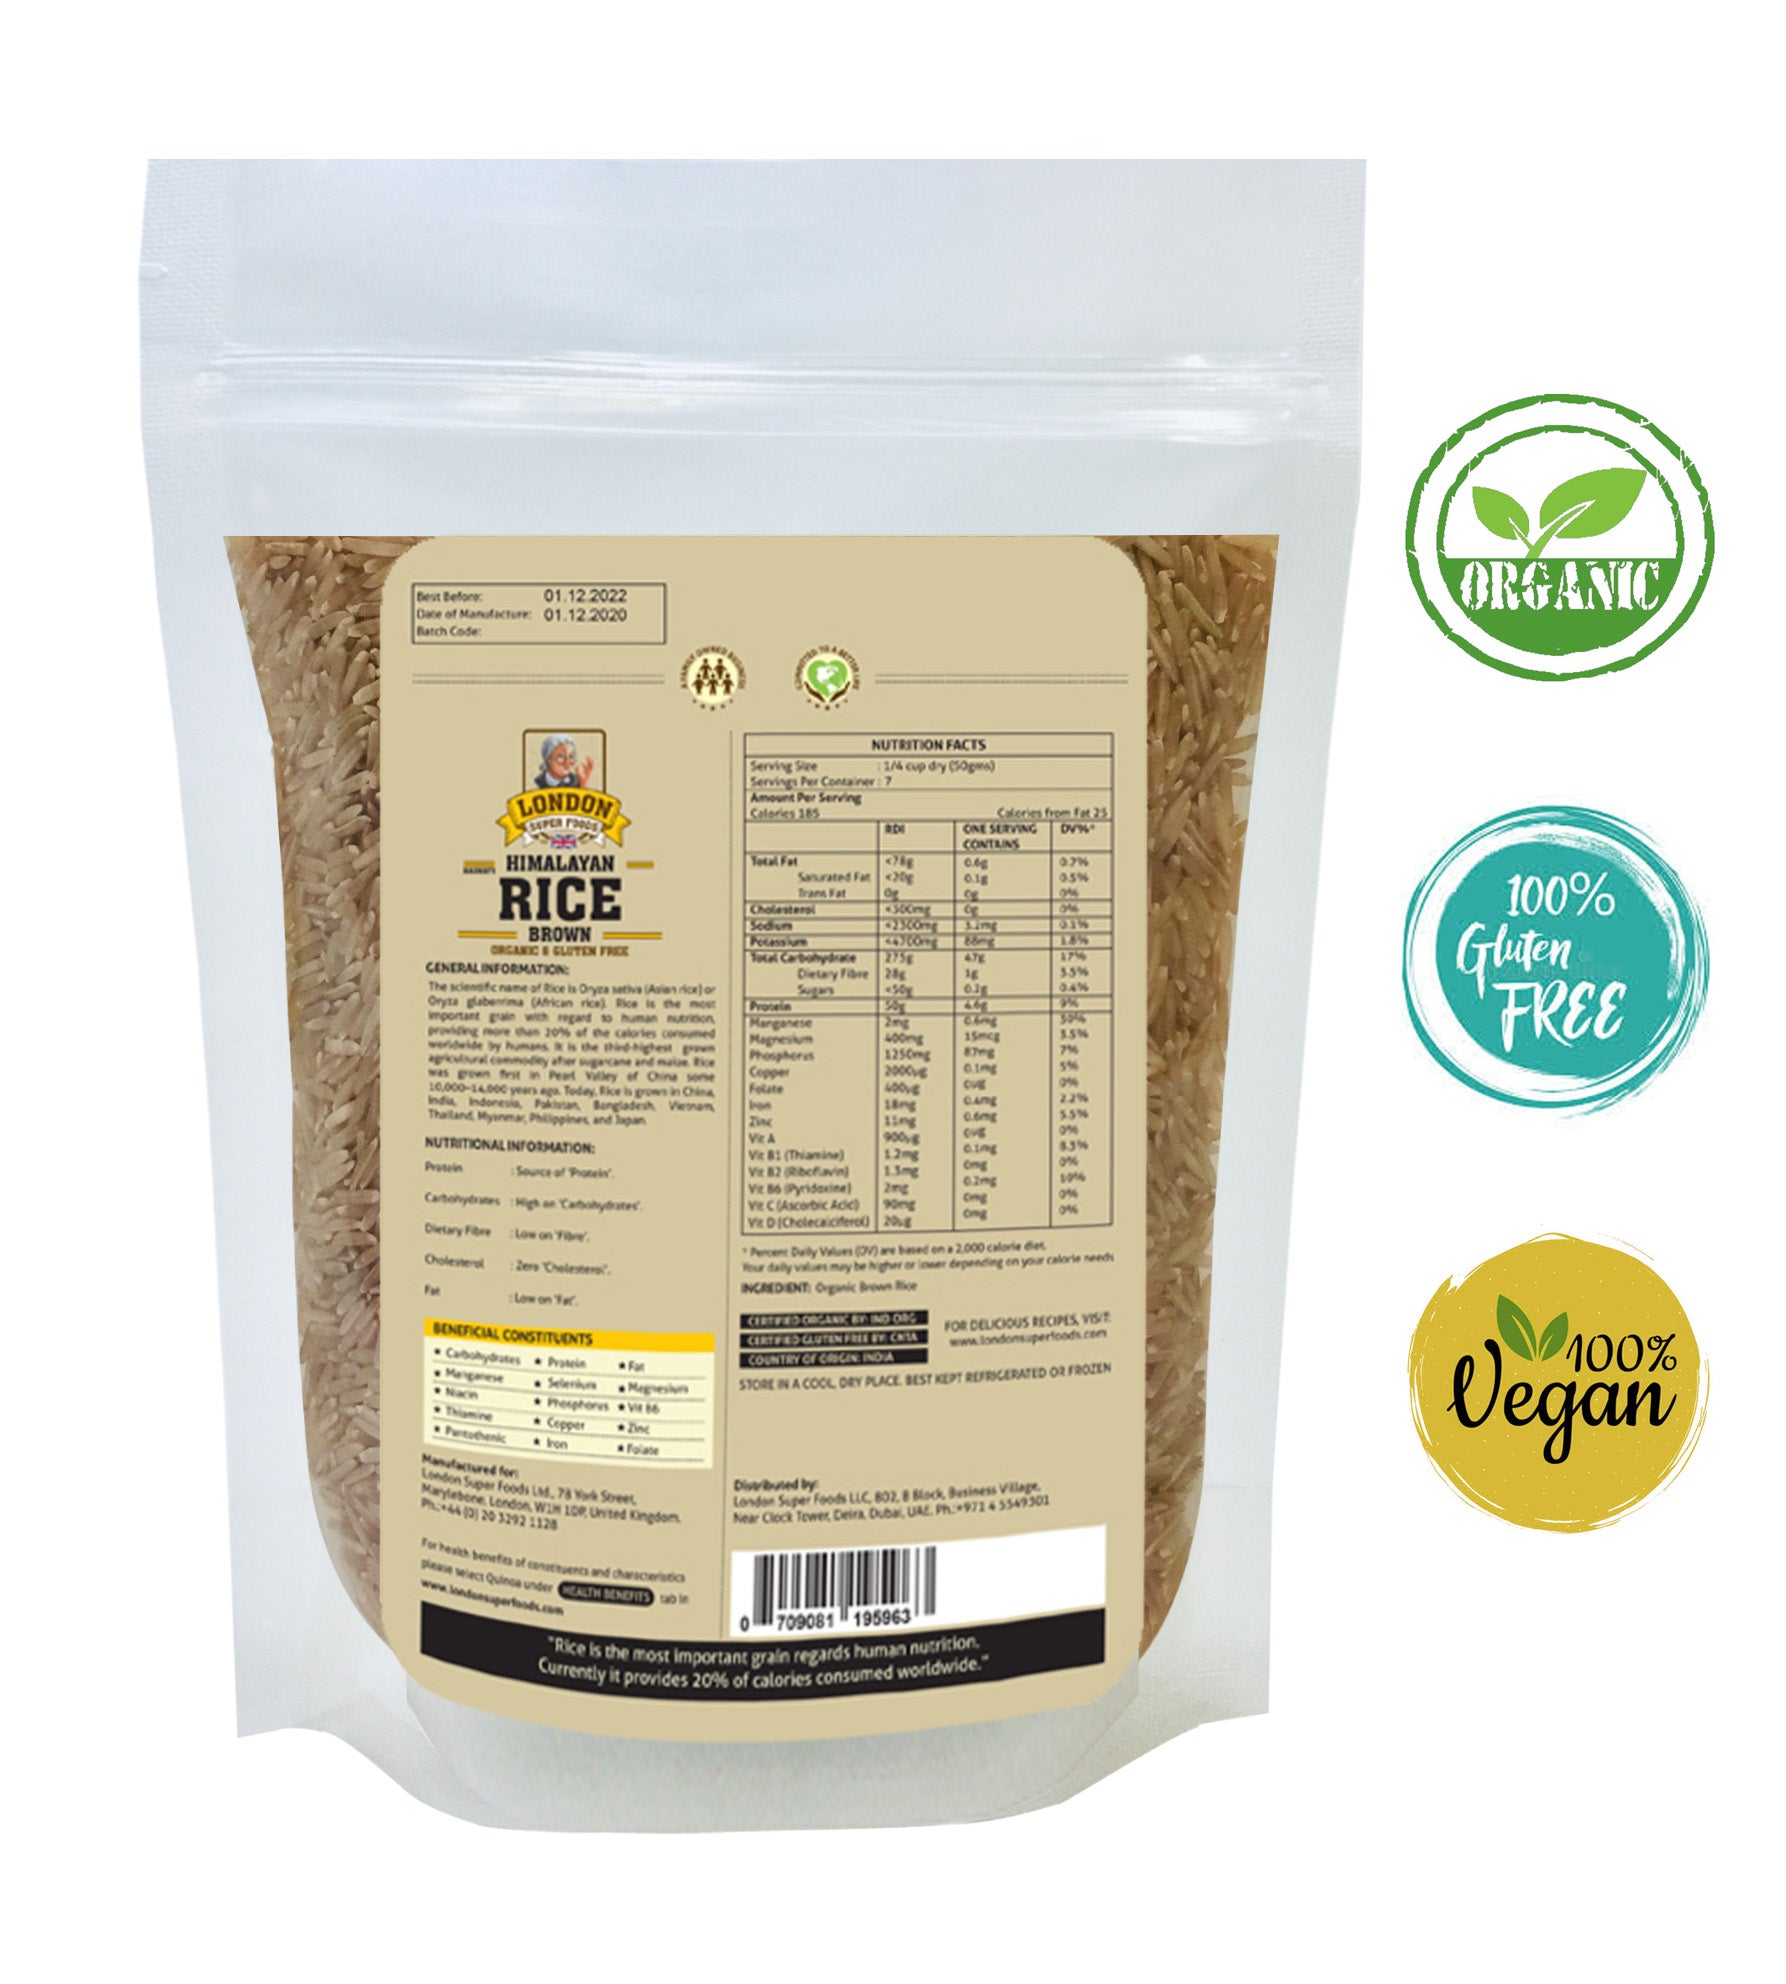 LONDON SUPER FOODS Organic Himalayan Brown Basmati Rice, 350g